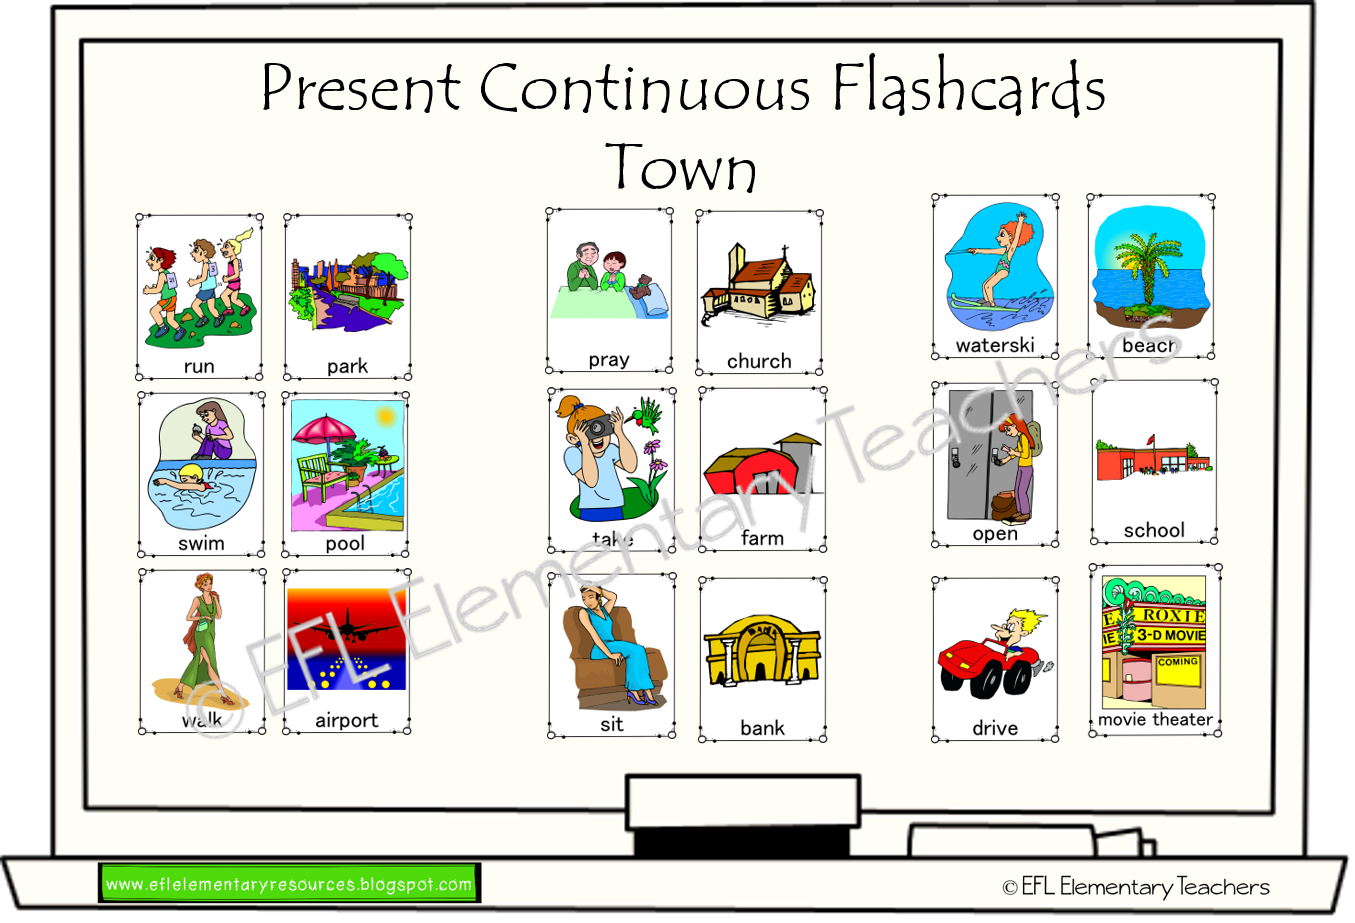 Present Continuous Flashcards. Презент континиус Flashcards. Present Continuous картинки для описания. Present Continuous Flashcards for Kids. Present continuous weather